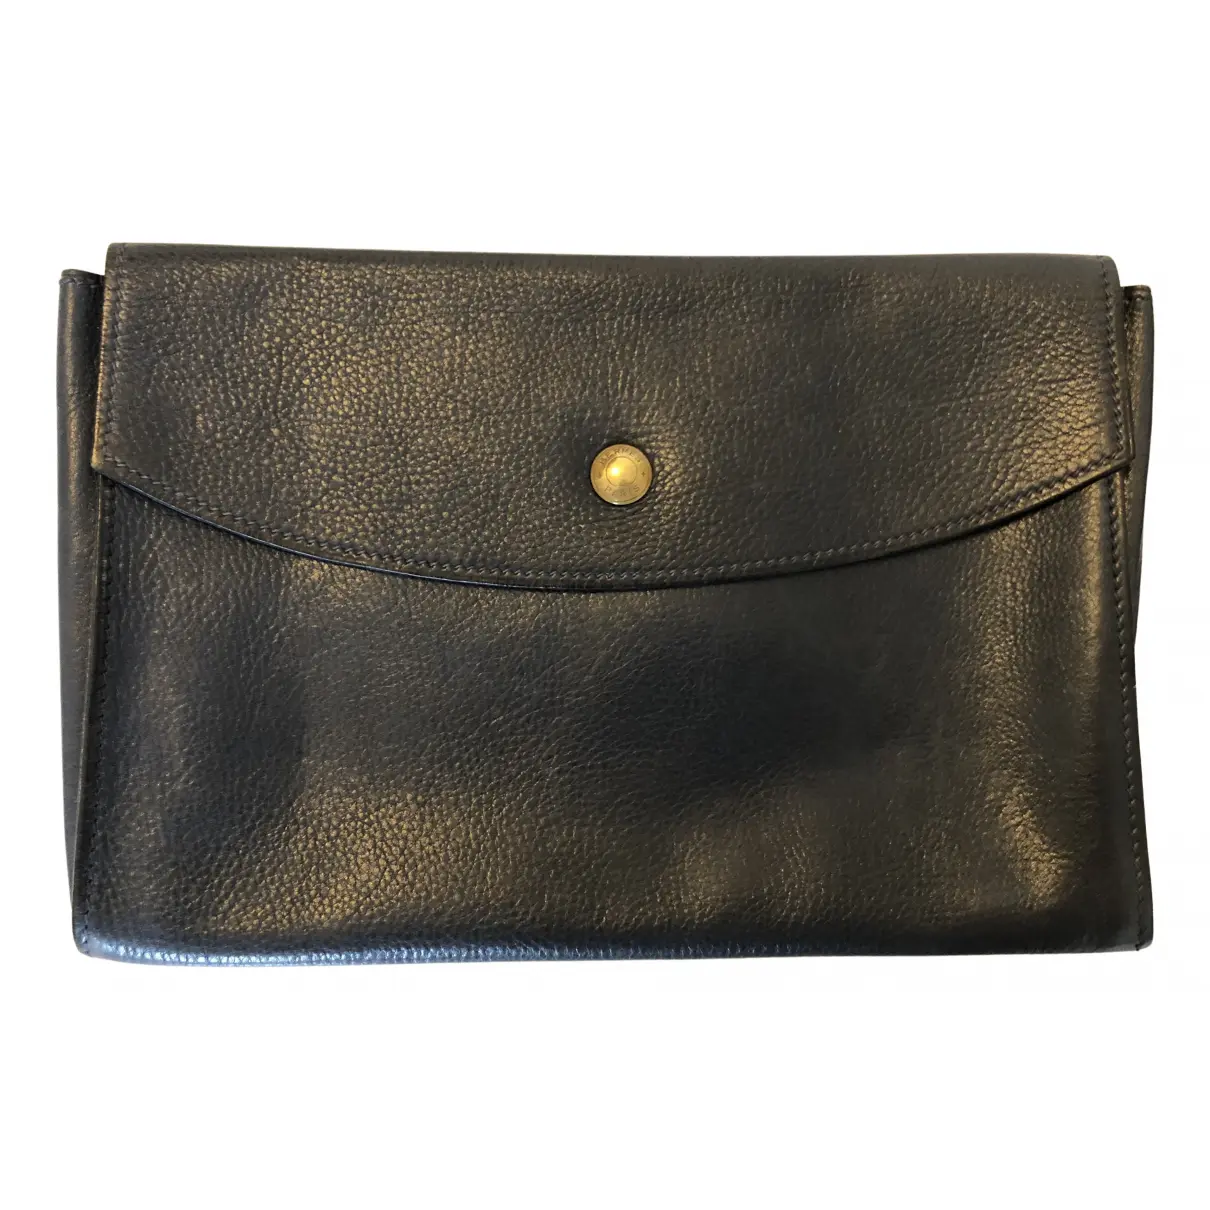 Rio leather clutch bag Hermès - Vintage